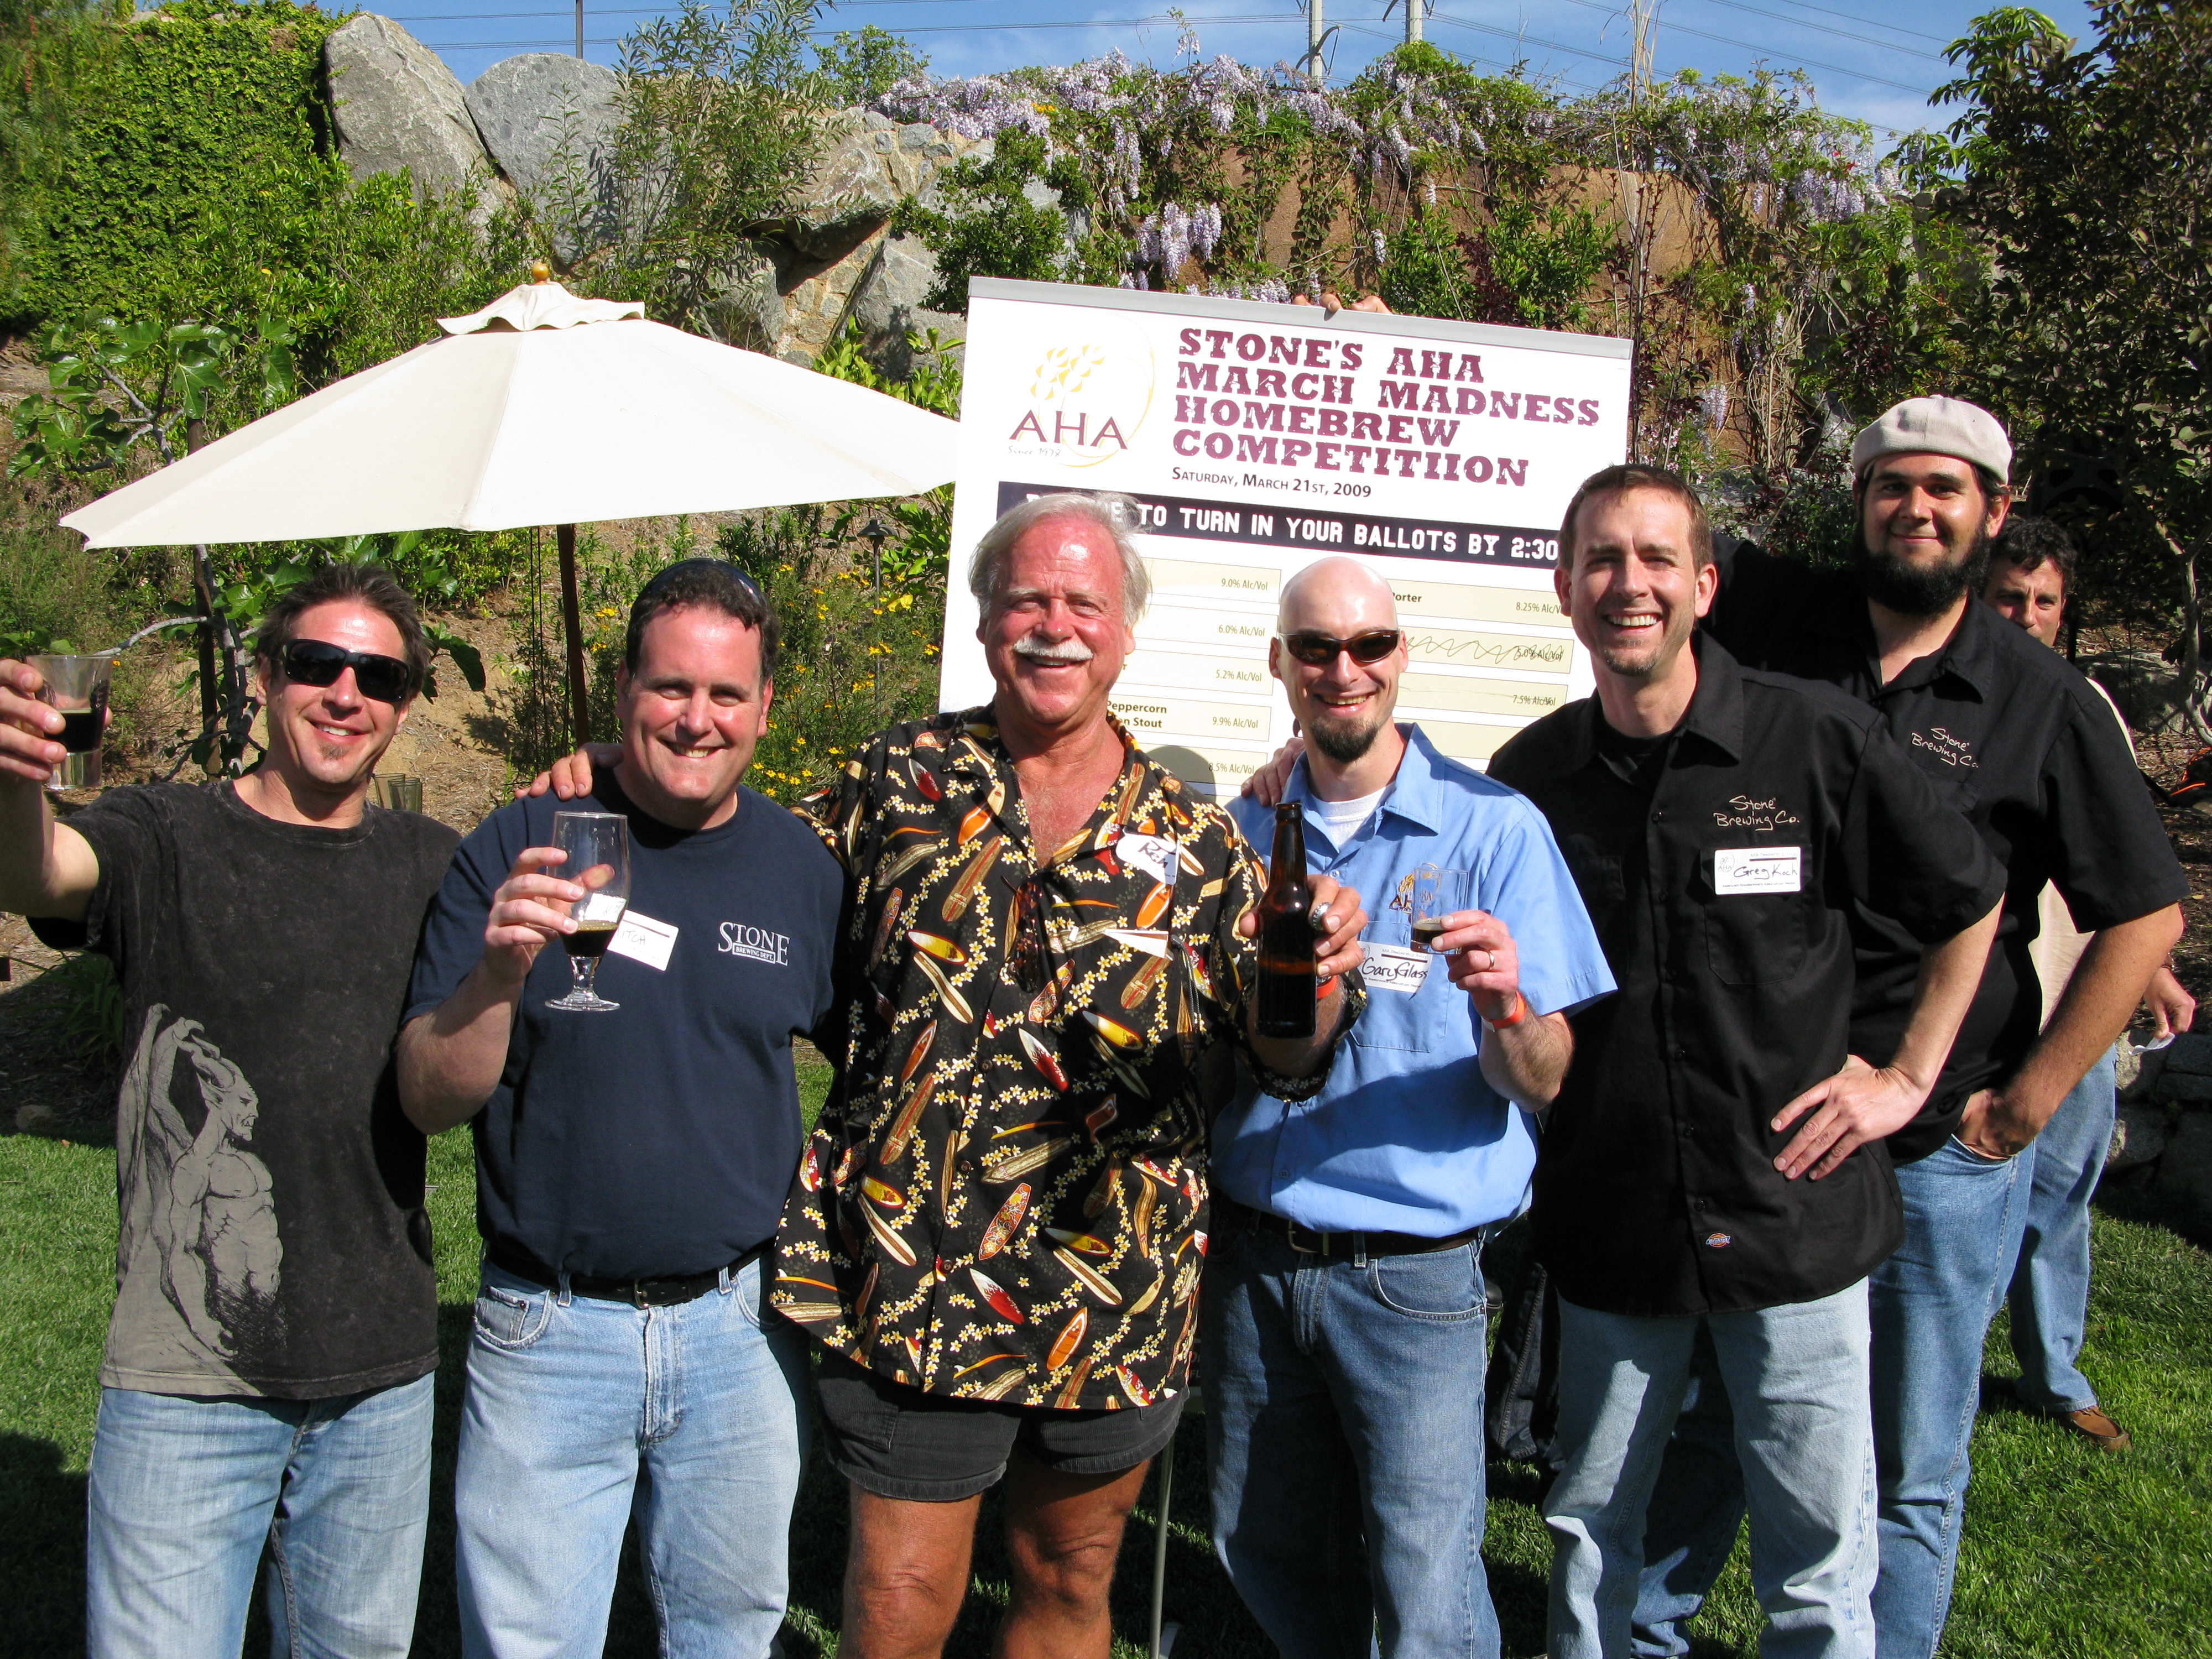 From left to right: Chris Cochran, Mitch Steele, Ken Schmidt, Gary Glass, Greg Koch, Mike Palmer